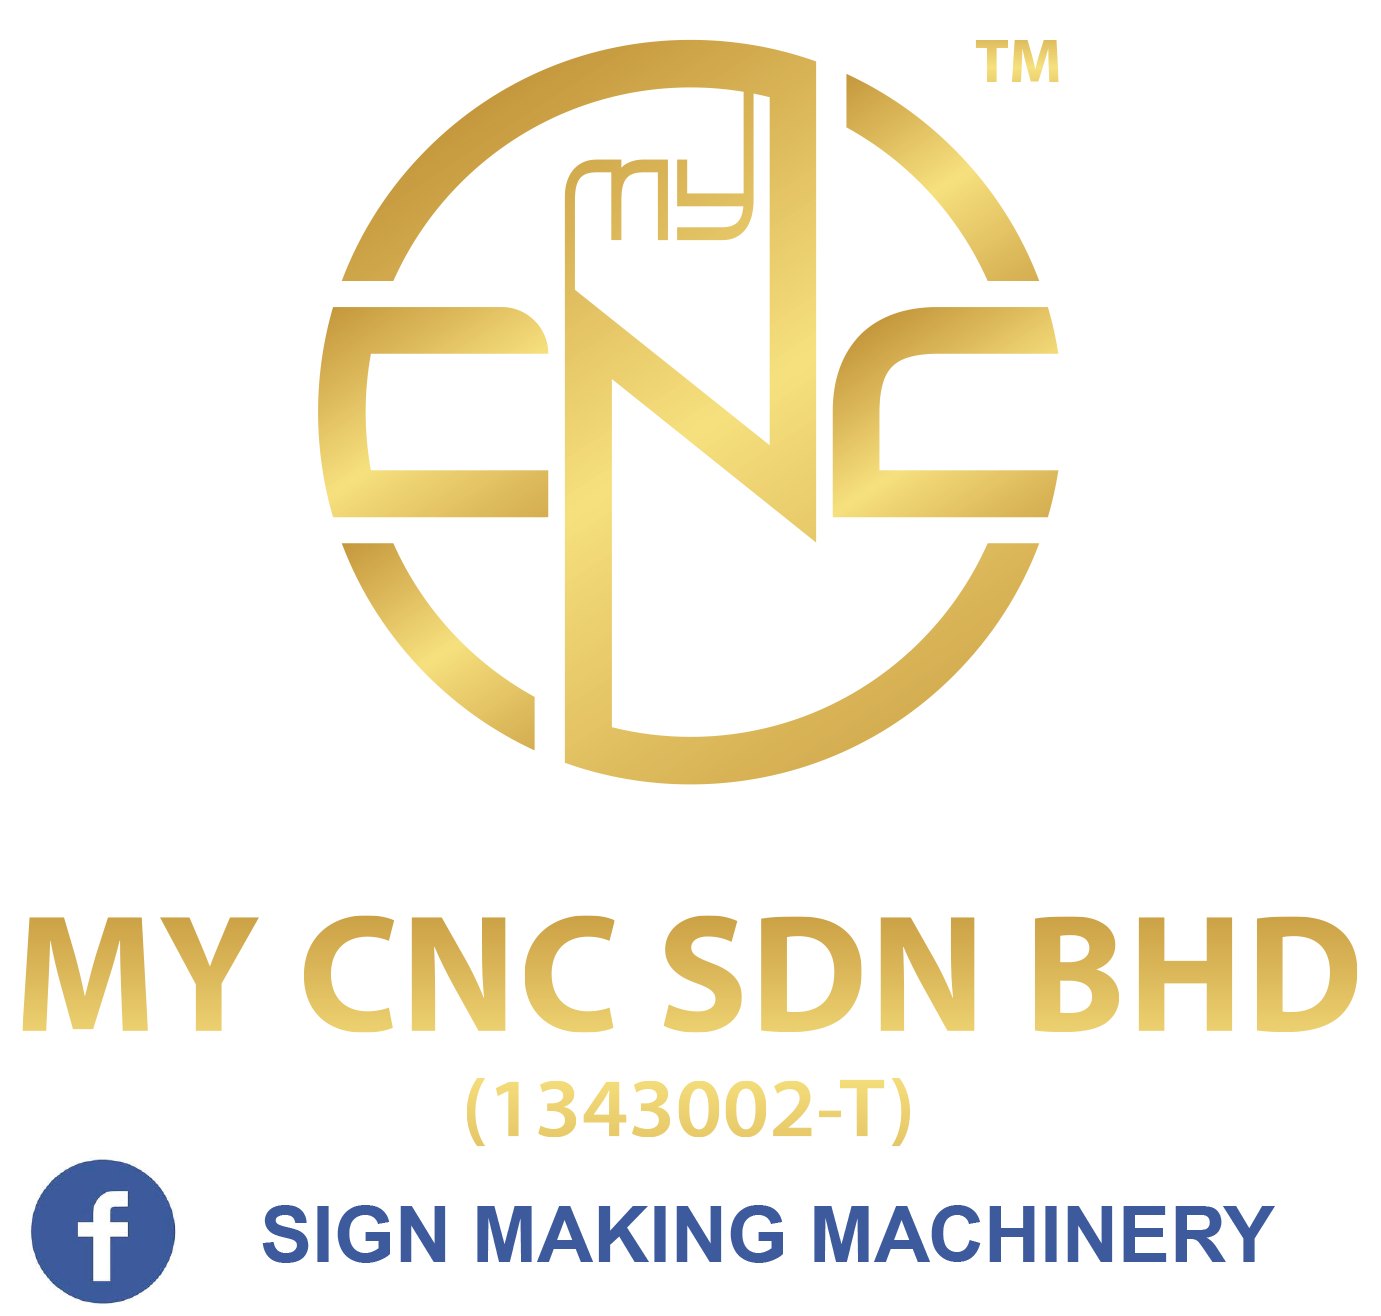 MY CNC SDN BHD (1343002-T)